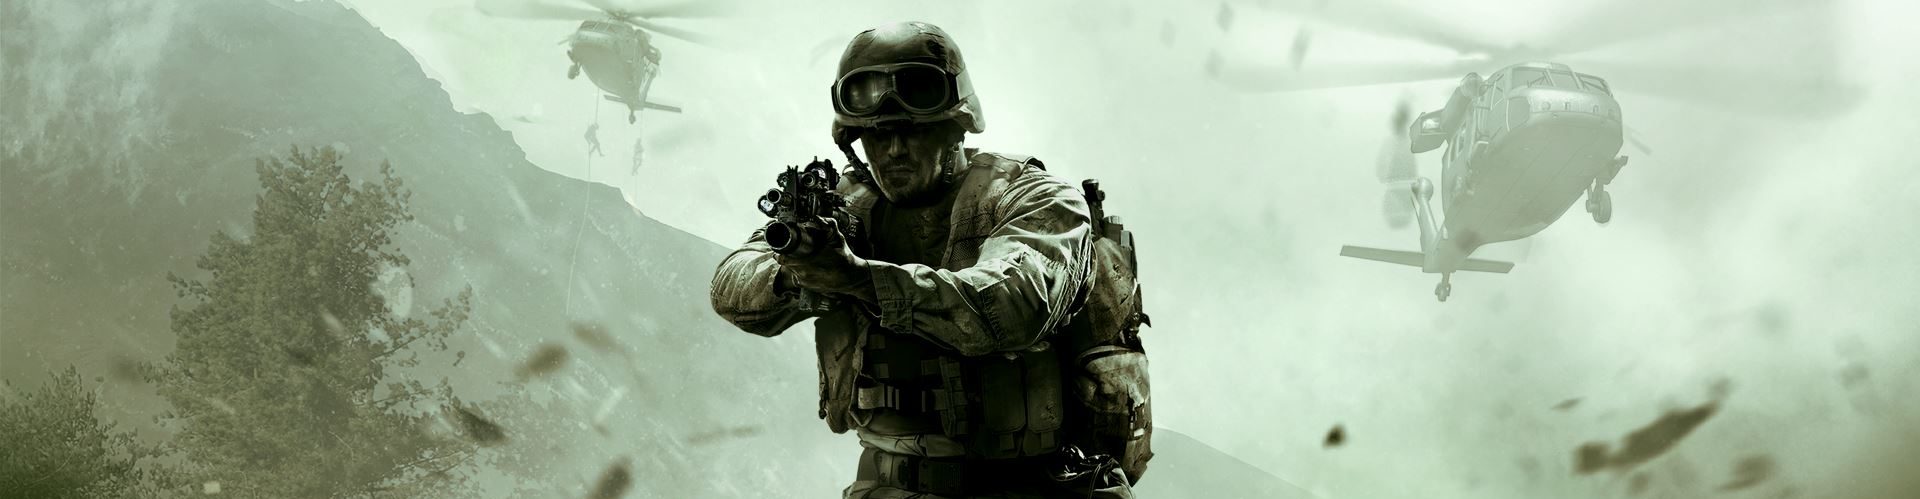 ‘Modern Warfare Remastered release volgende maand’